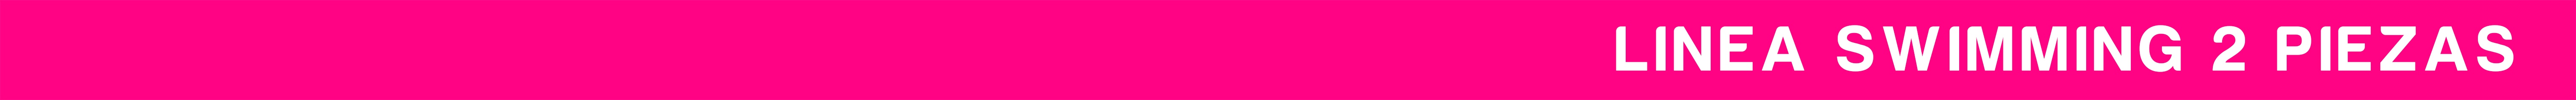 rosado-swimming-2-piezas